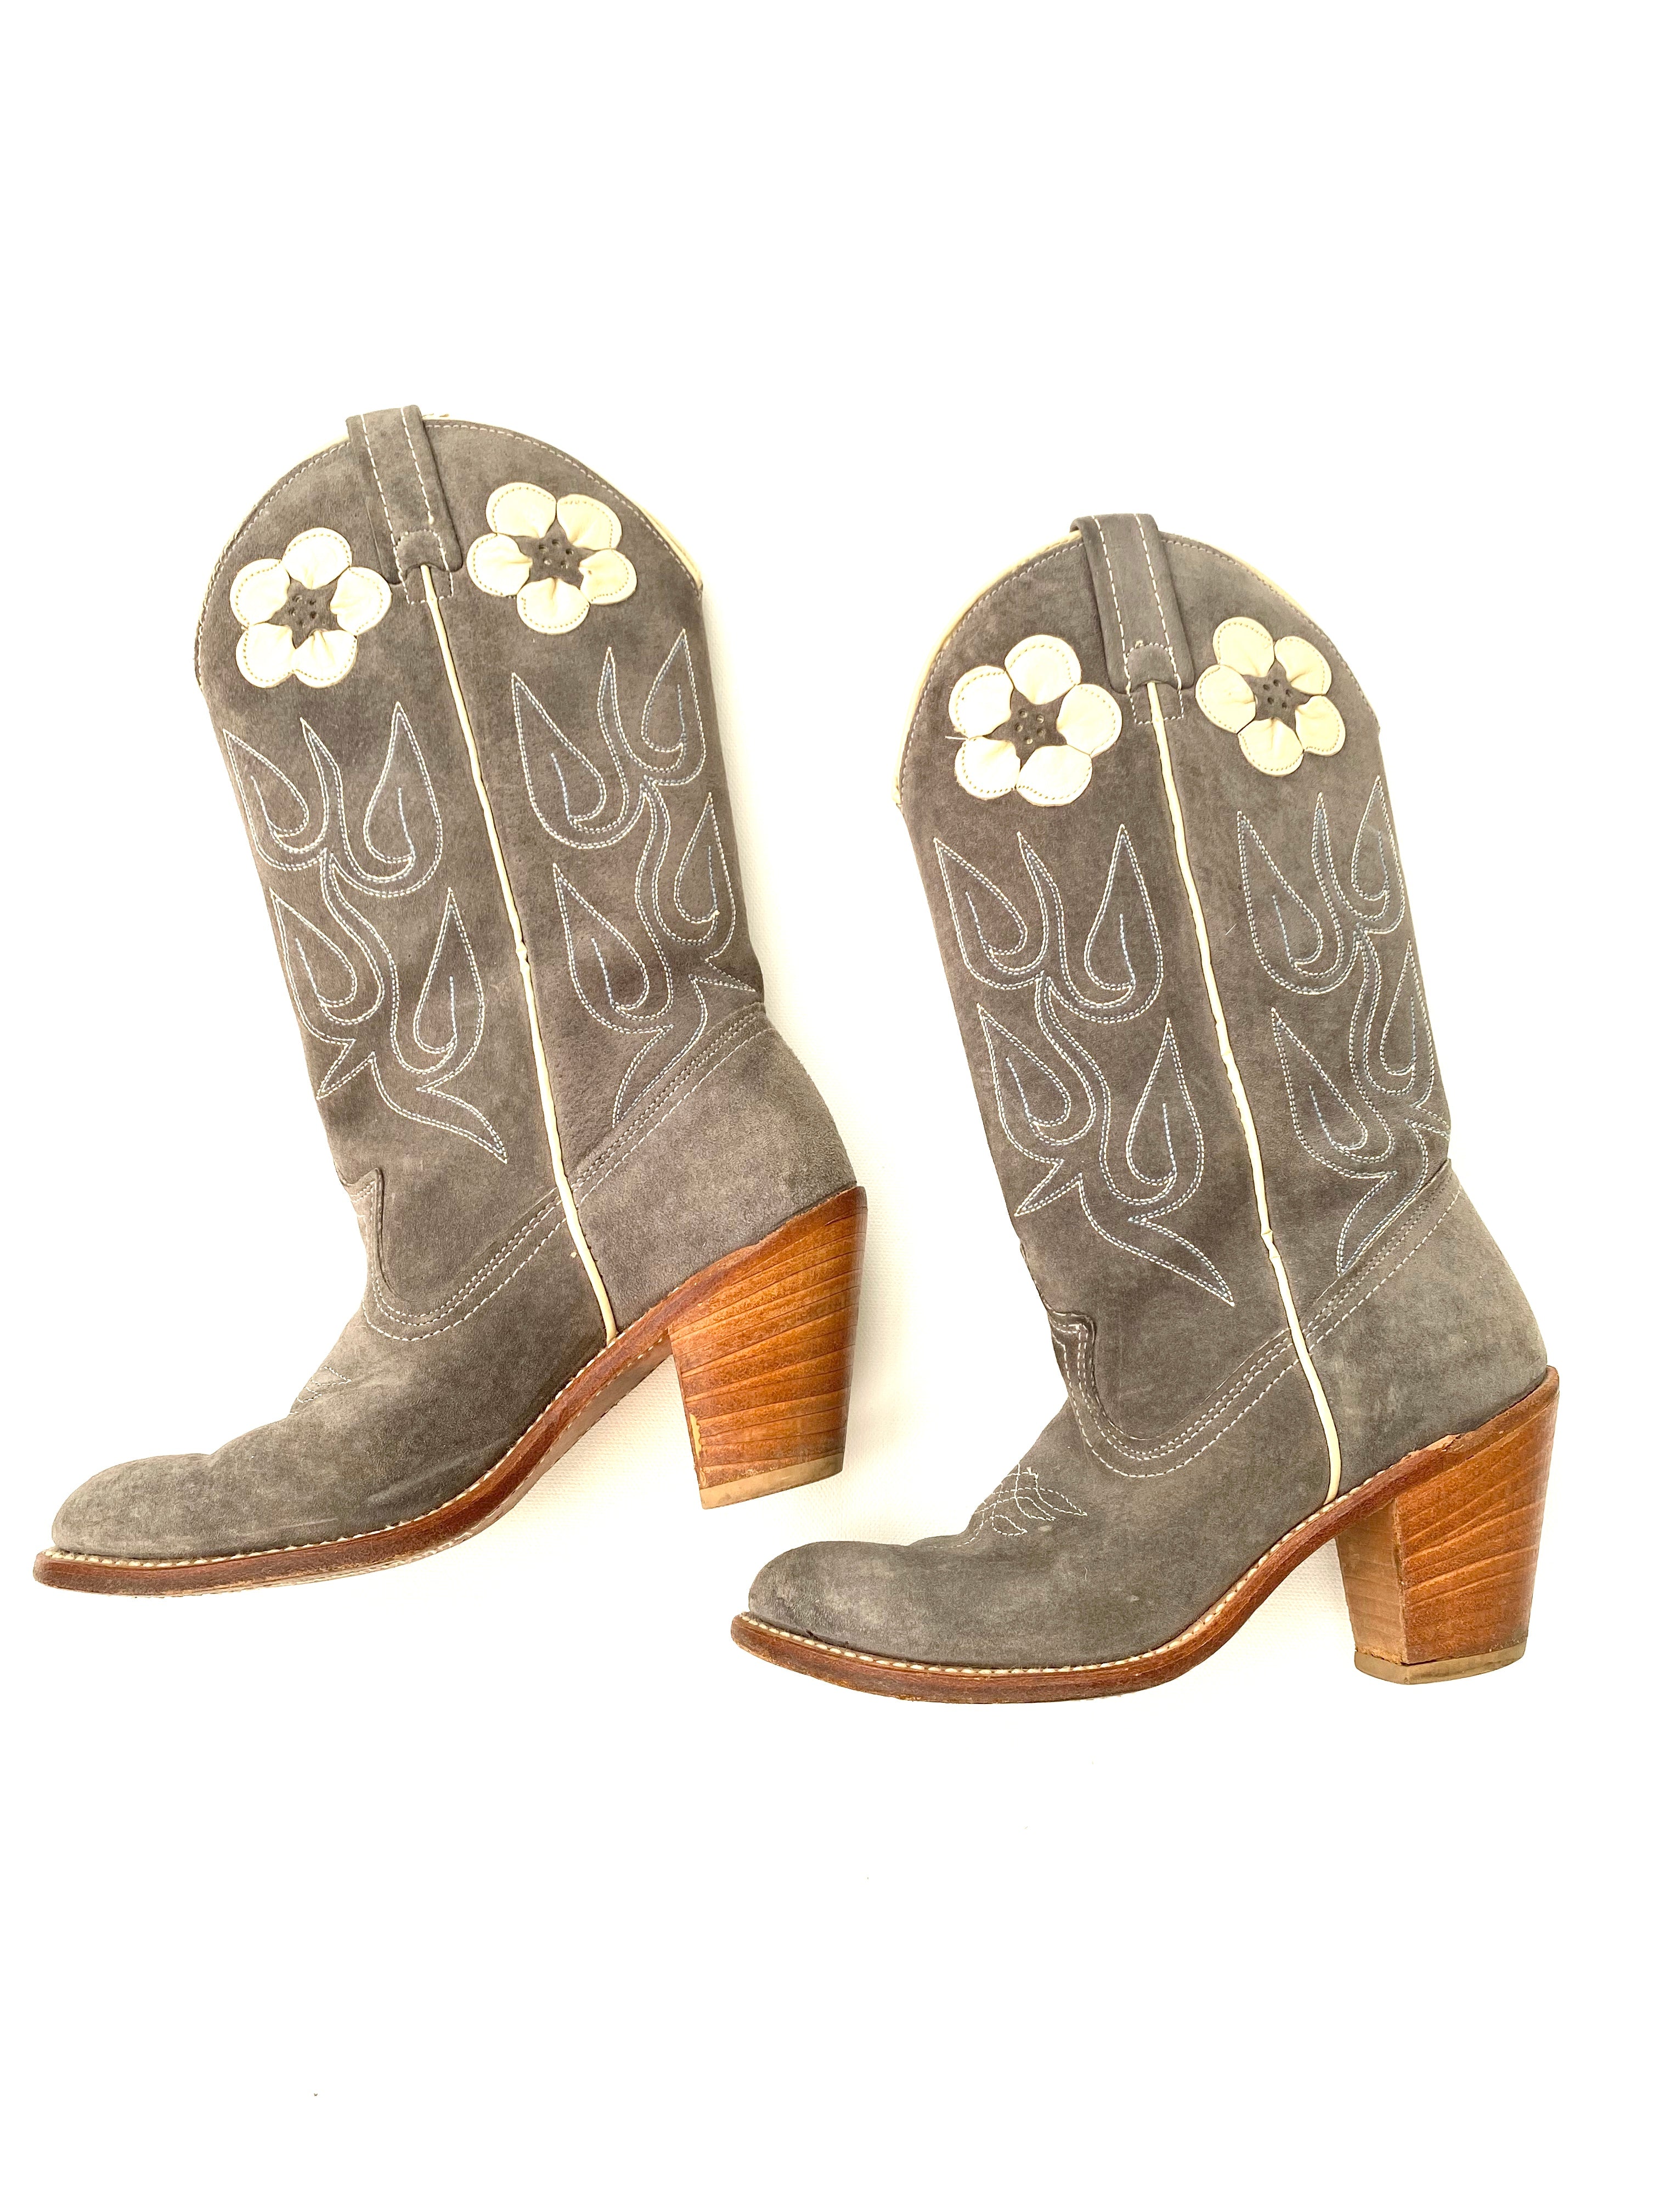 Vintage Western Boots - Gray Suede